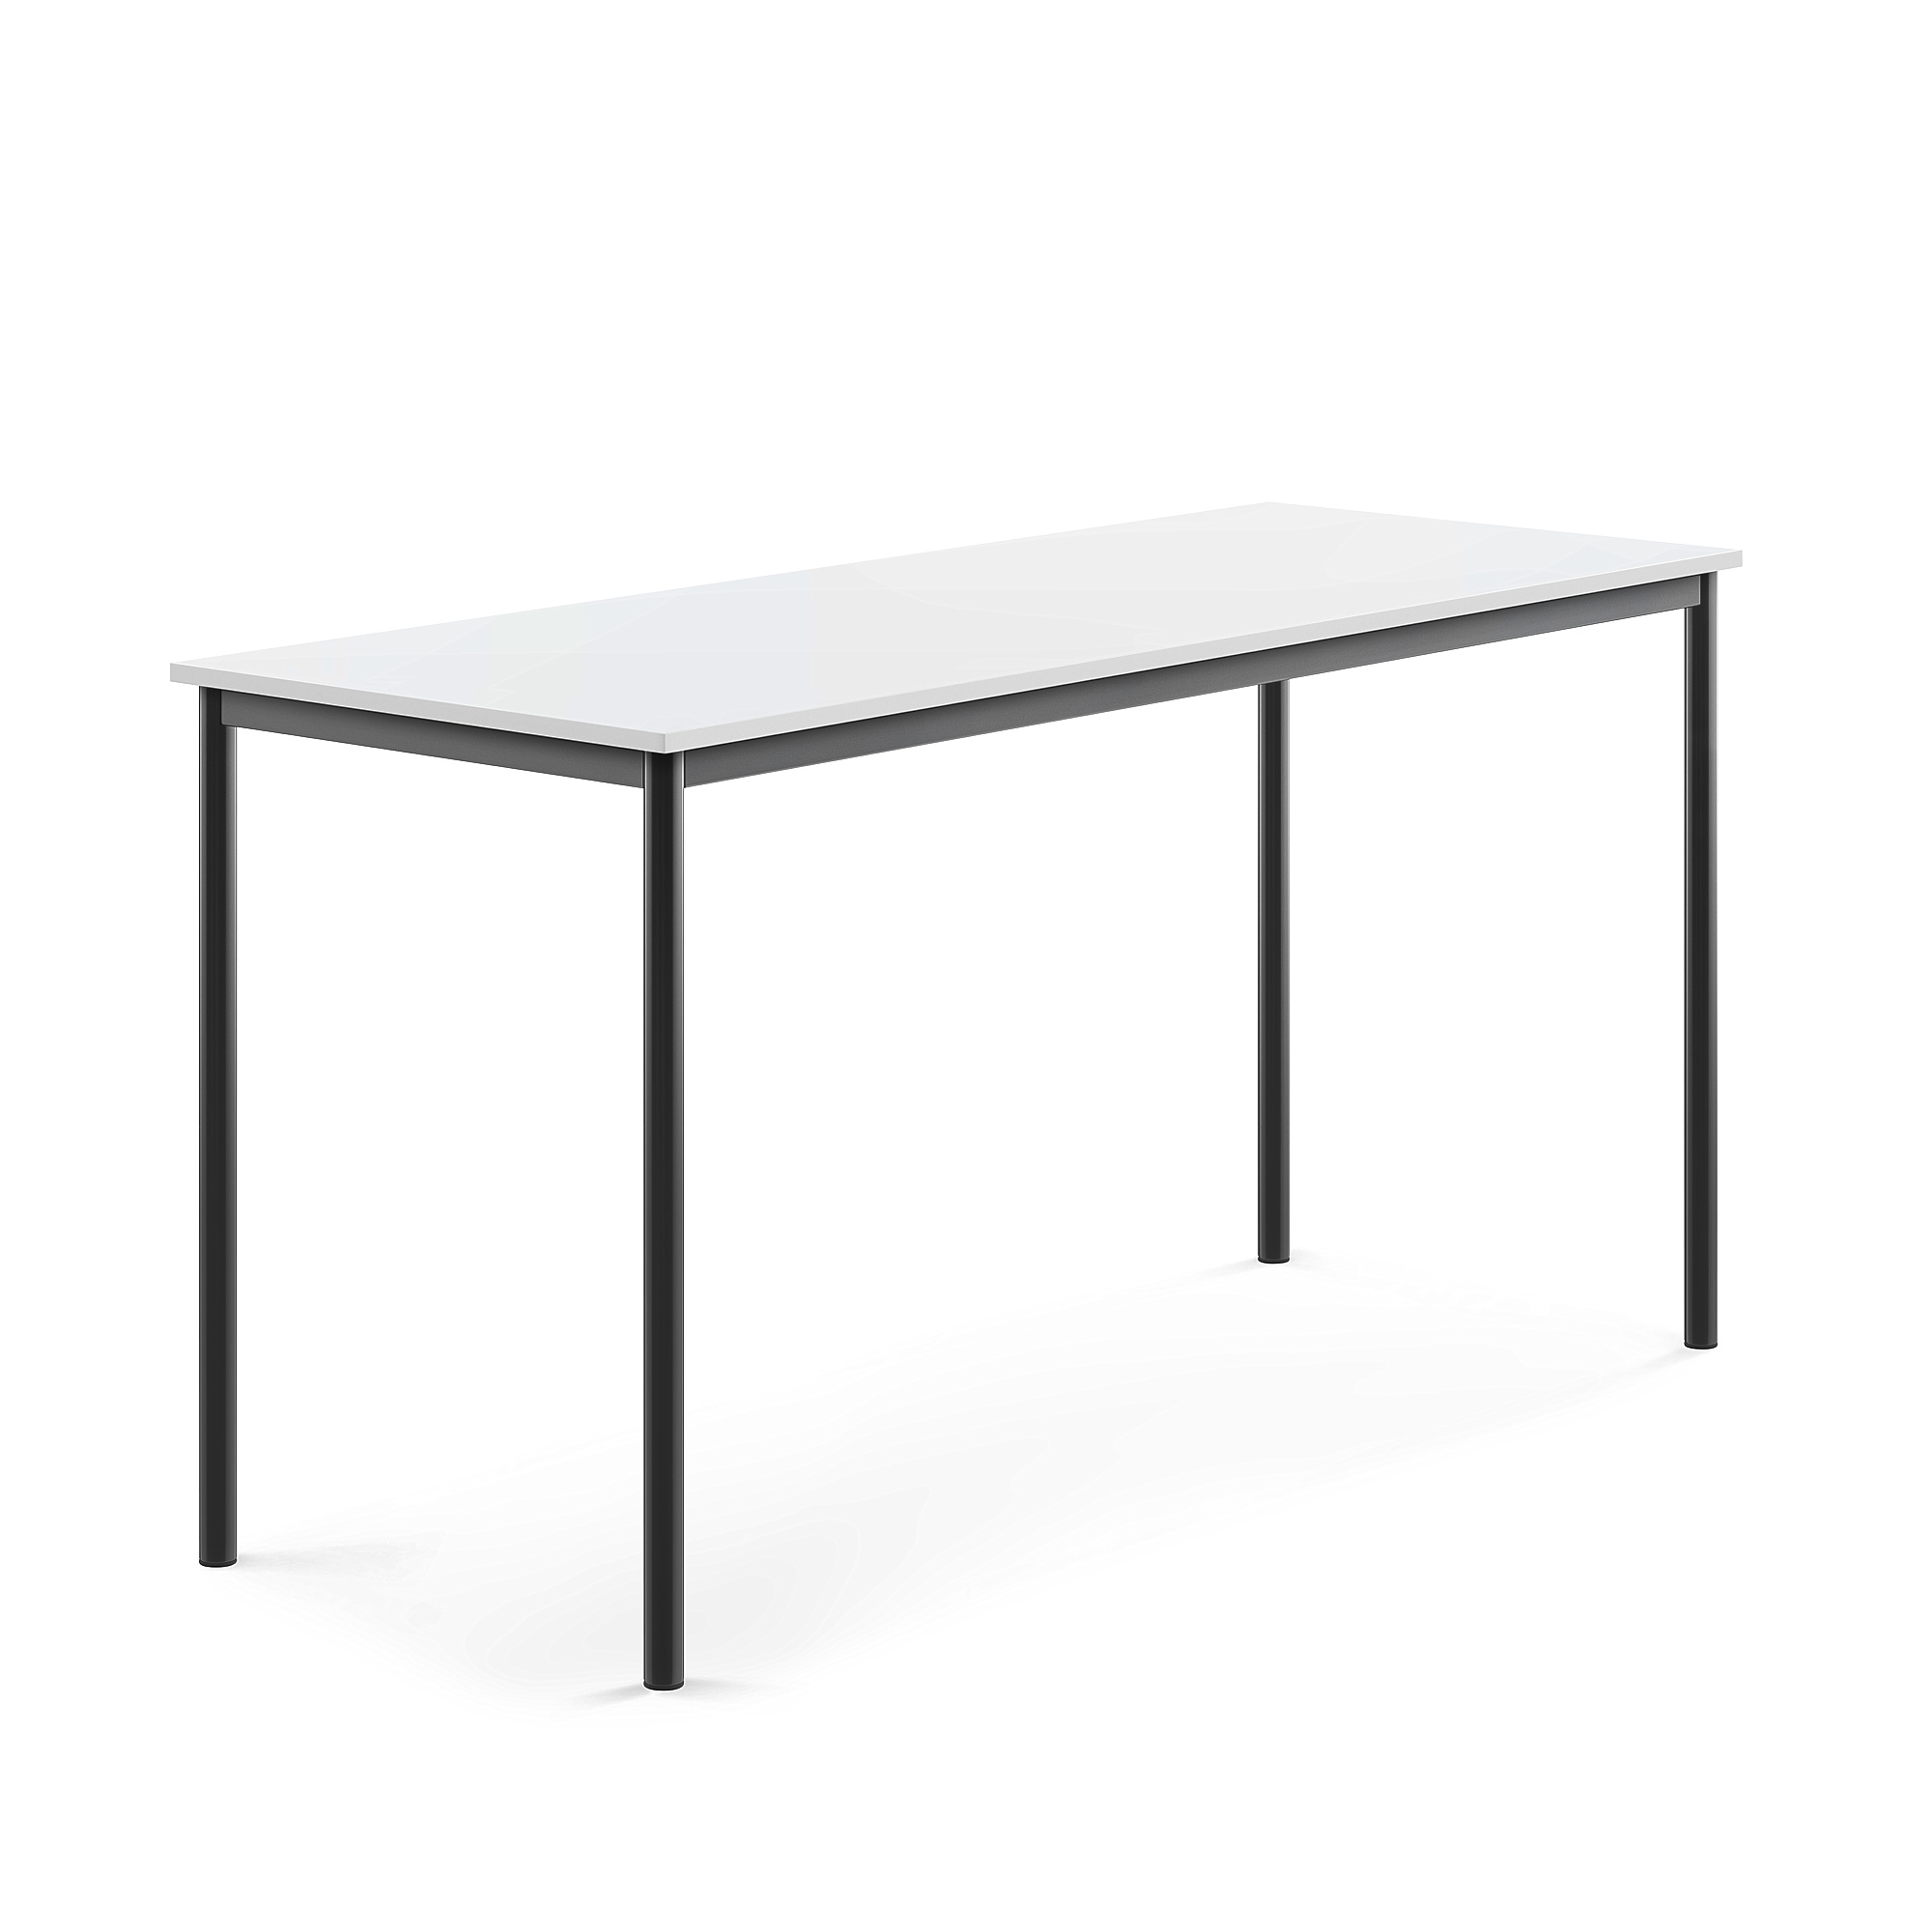 Stůl BORÅS, 1800x700x900 mm, antracitově šedé nohy, HPL deska, bílá